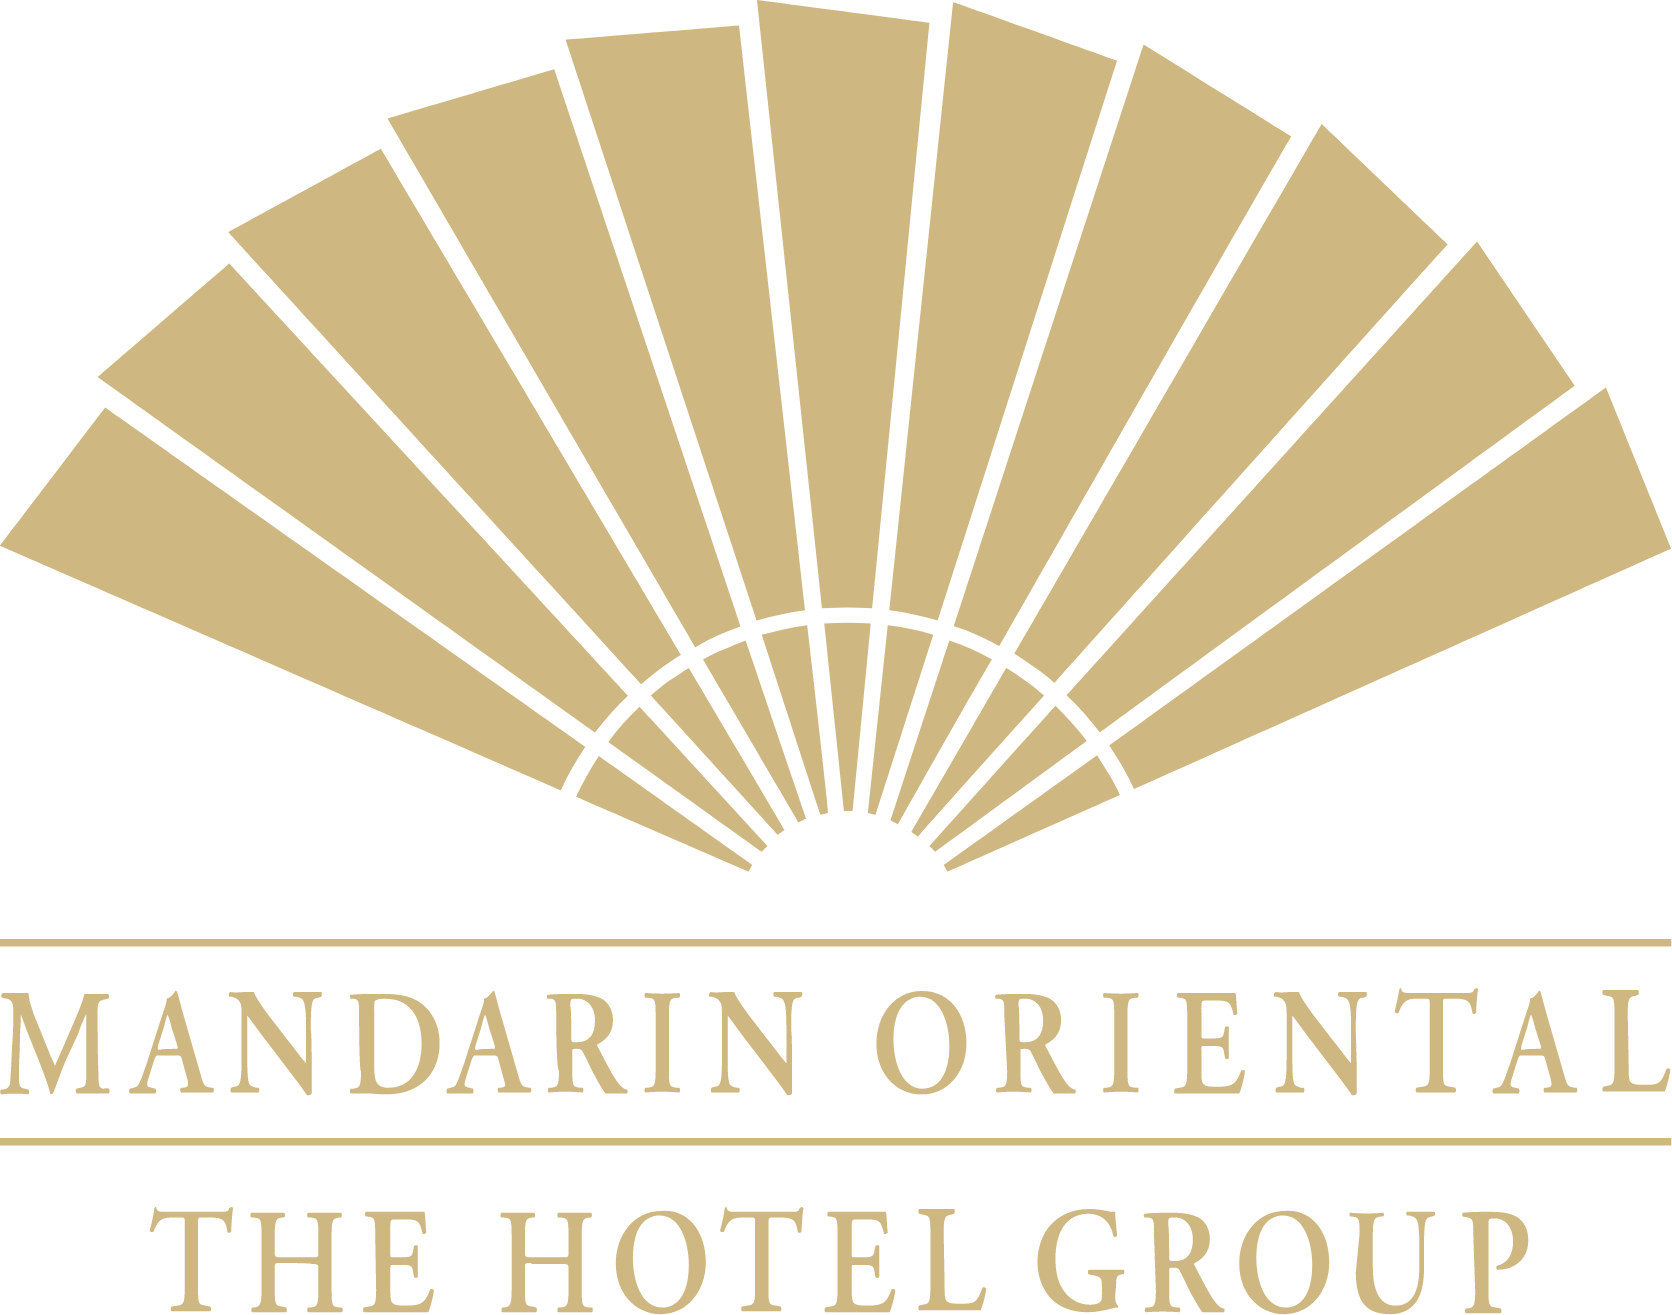 Mandarin Oriental logo large (transparent PNG)